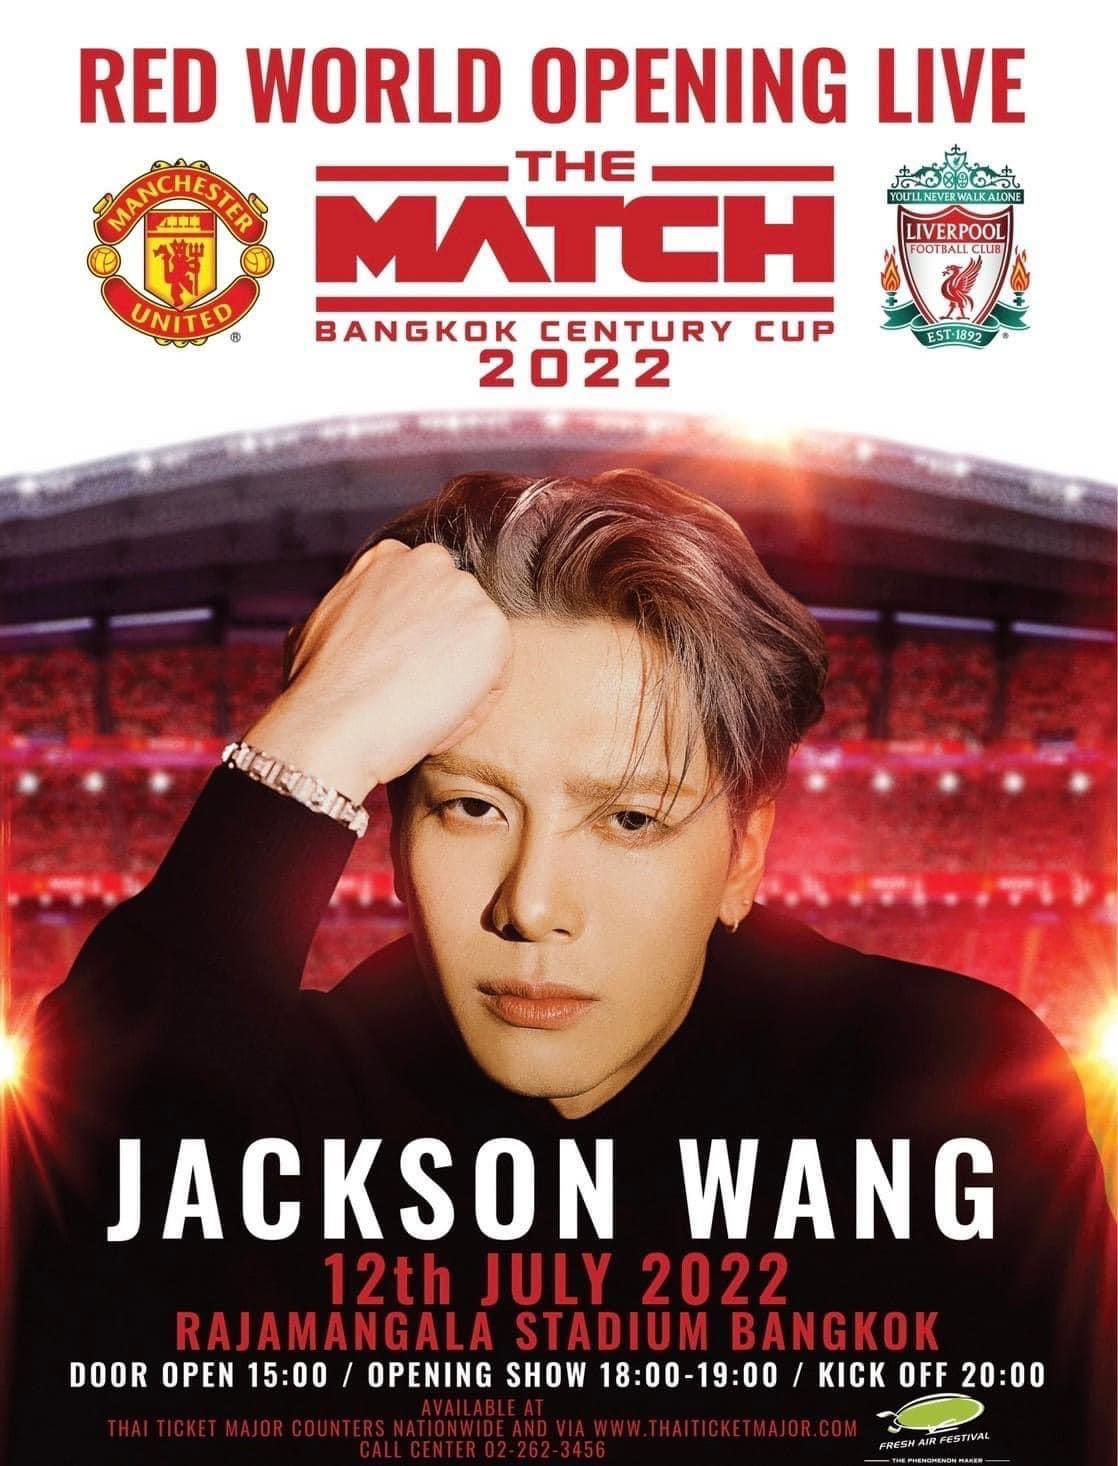 WTS] [Europe] Jackson Wang Platinum Ticket for Paris 15/1/23 : r